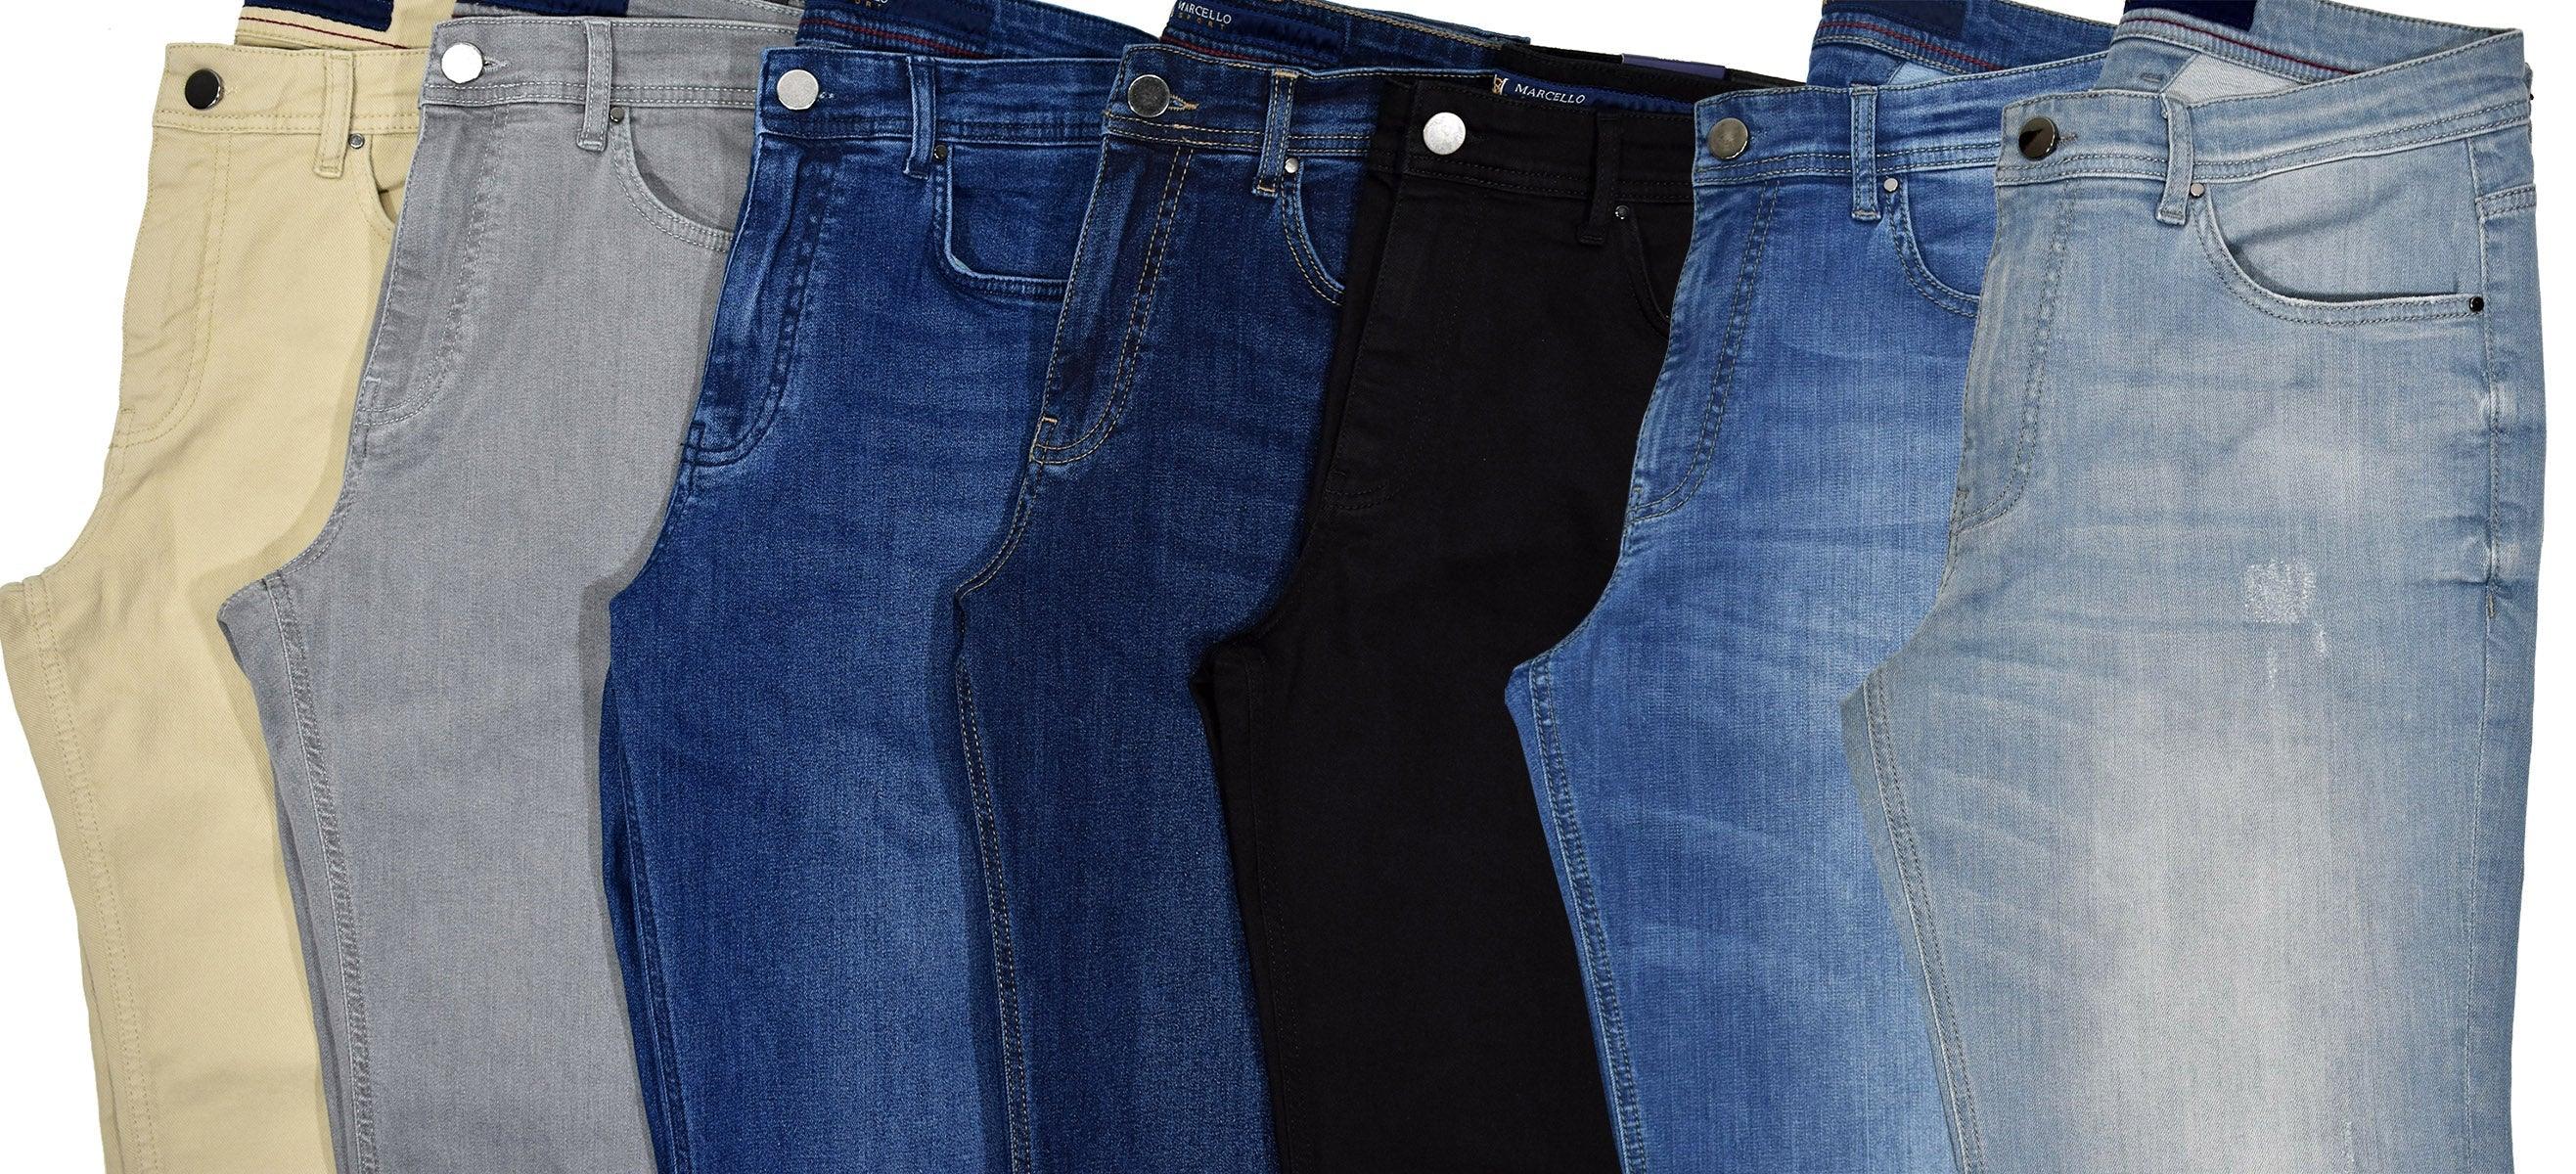 Modern Fit Jeans